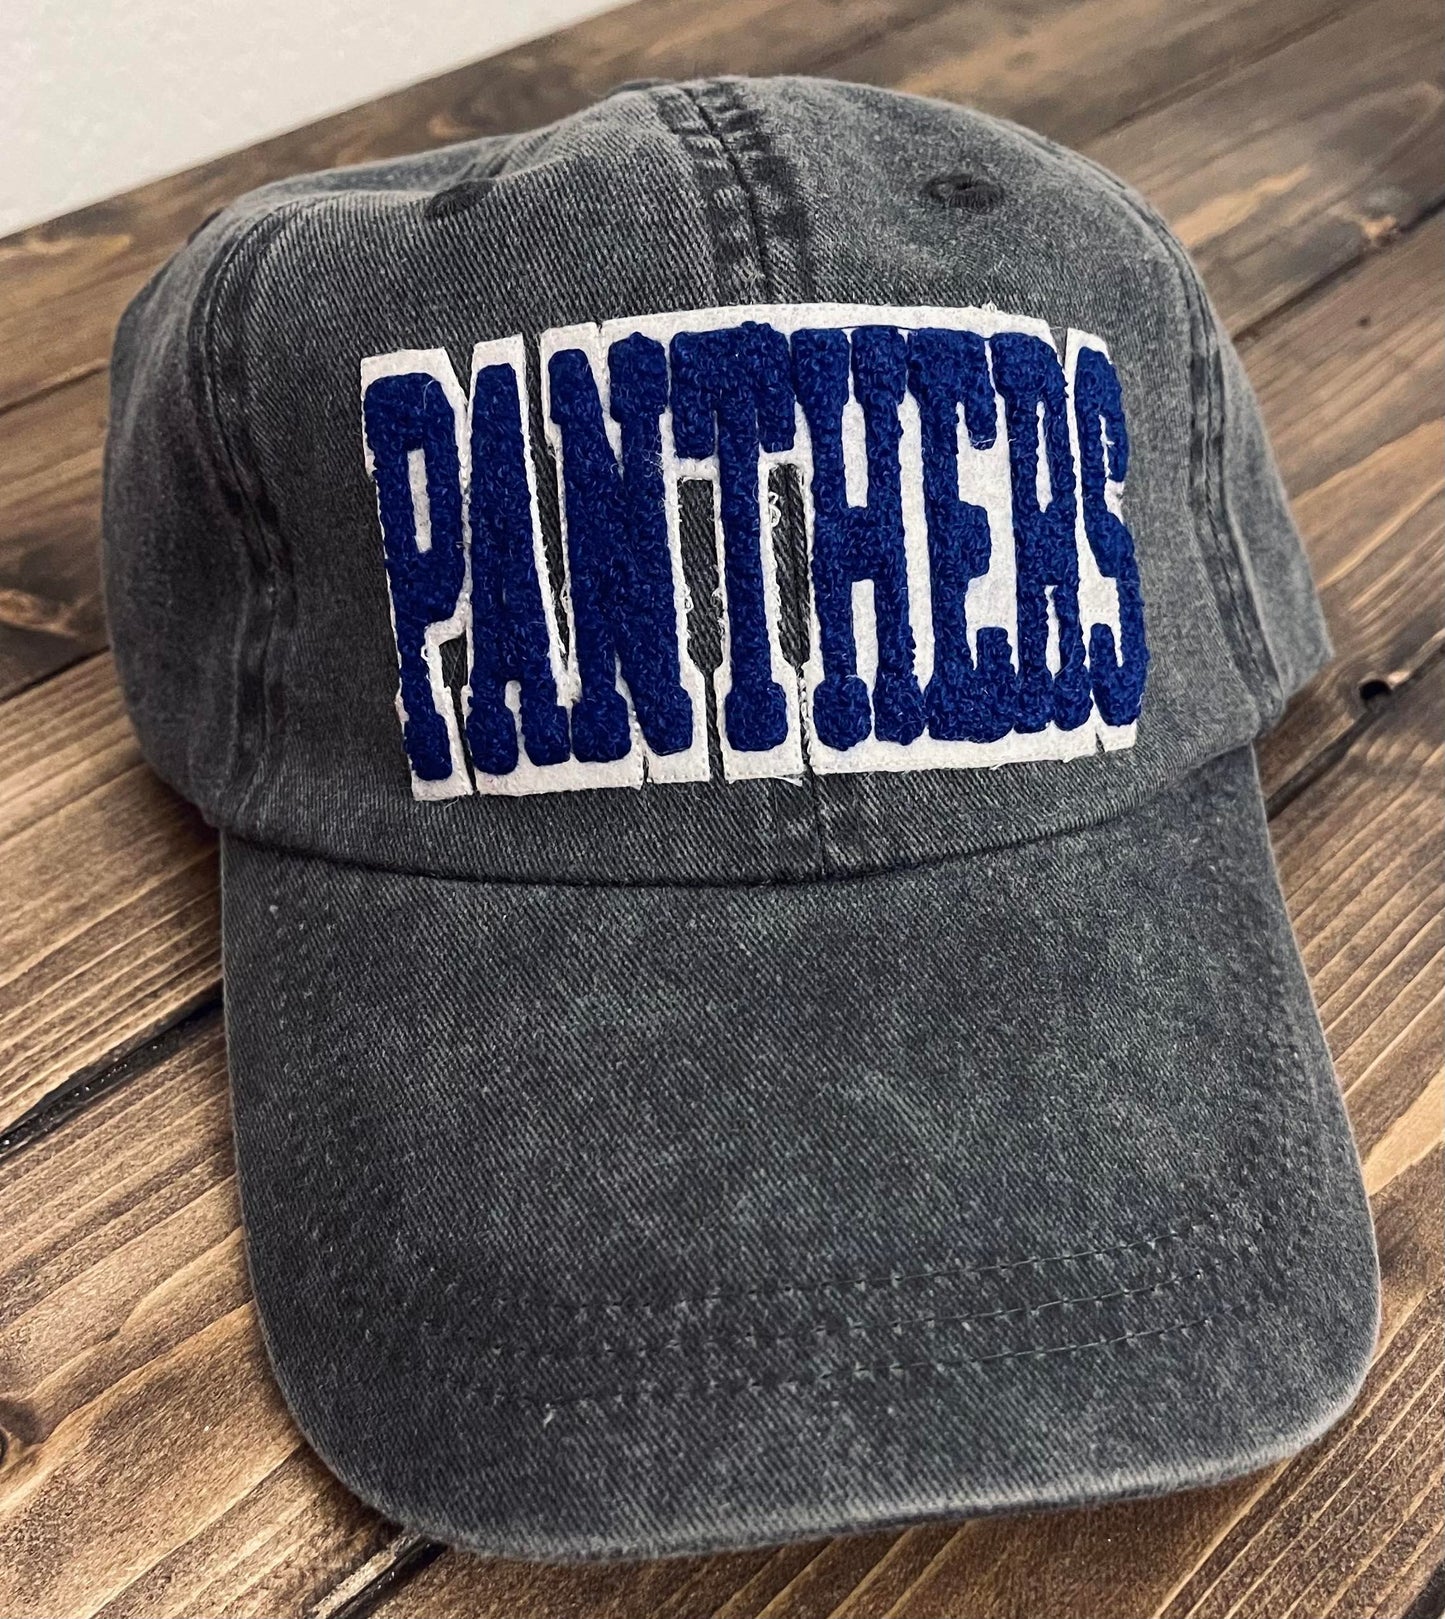 PANTHERS - Vintage Chenille Patch Cap